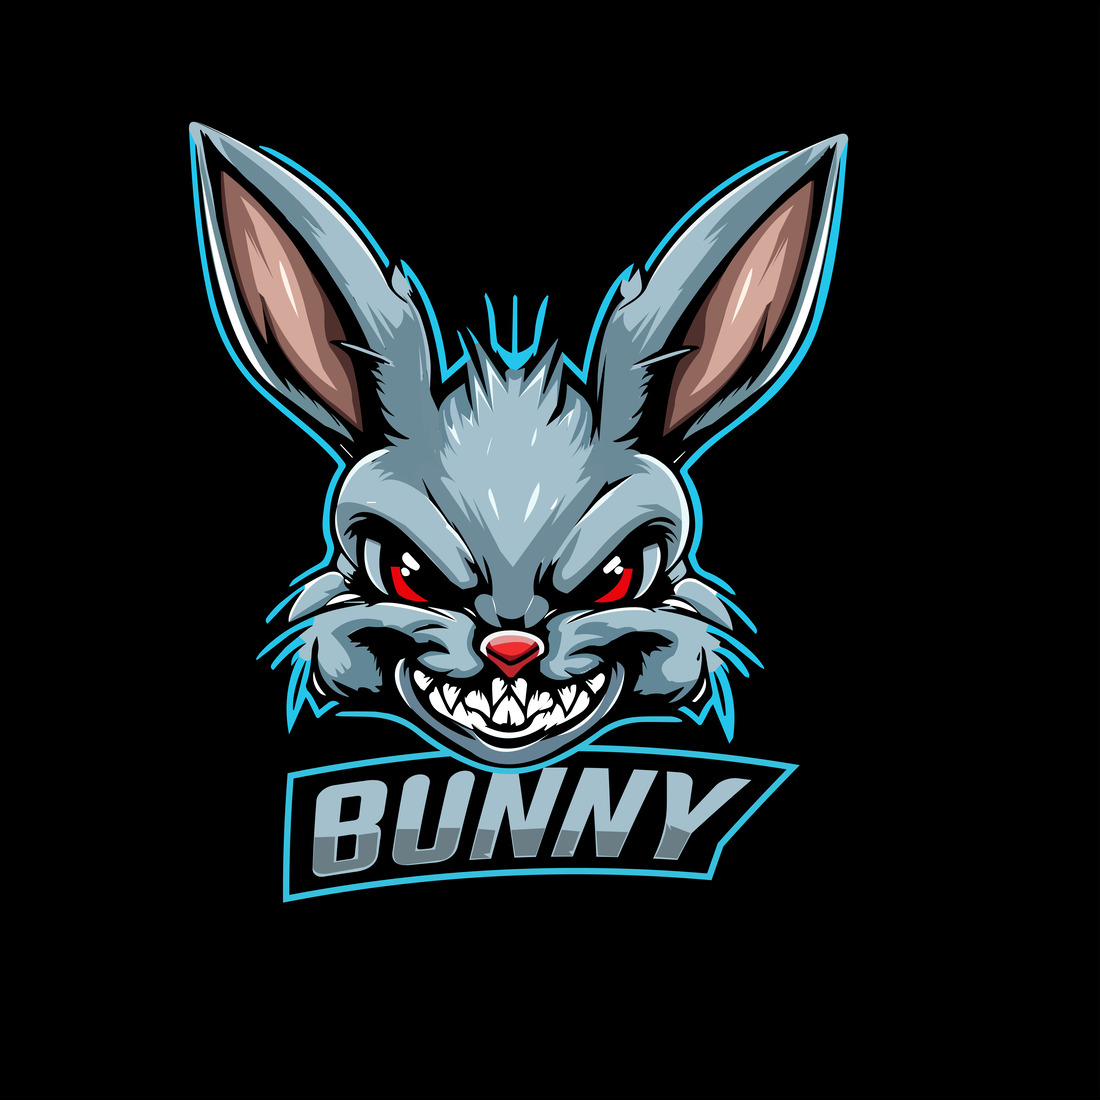 Bunny Logo Design cover image.